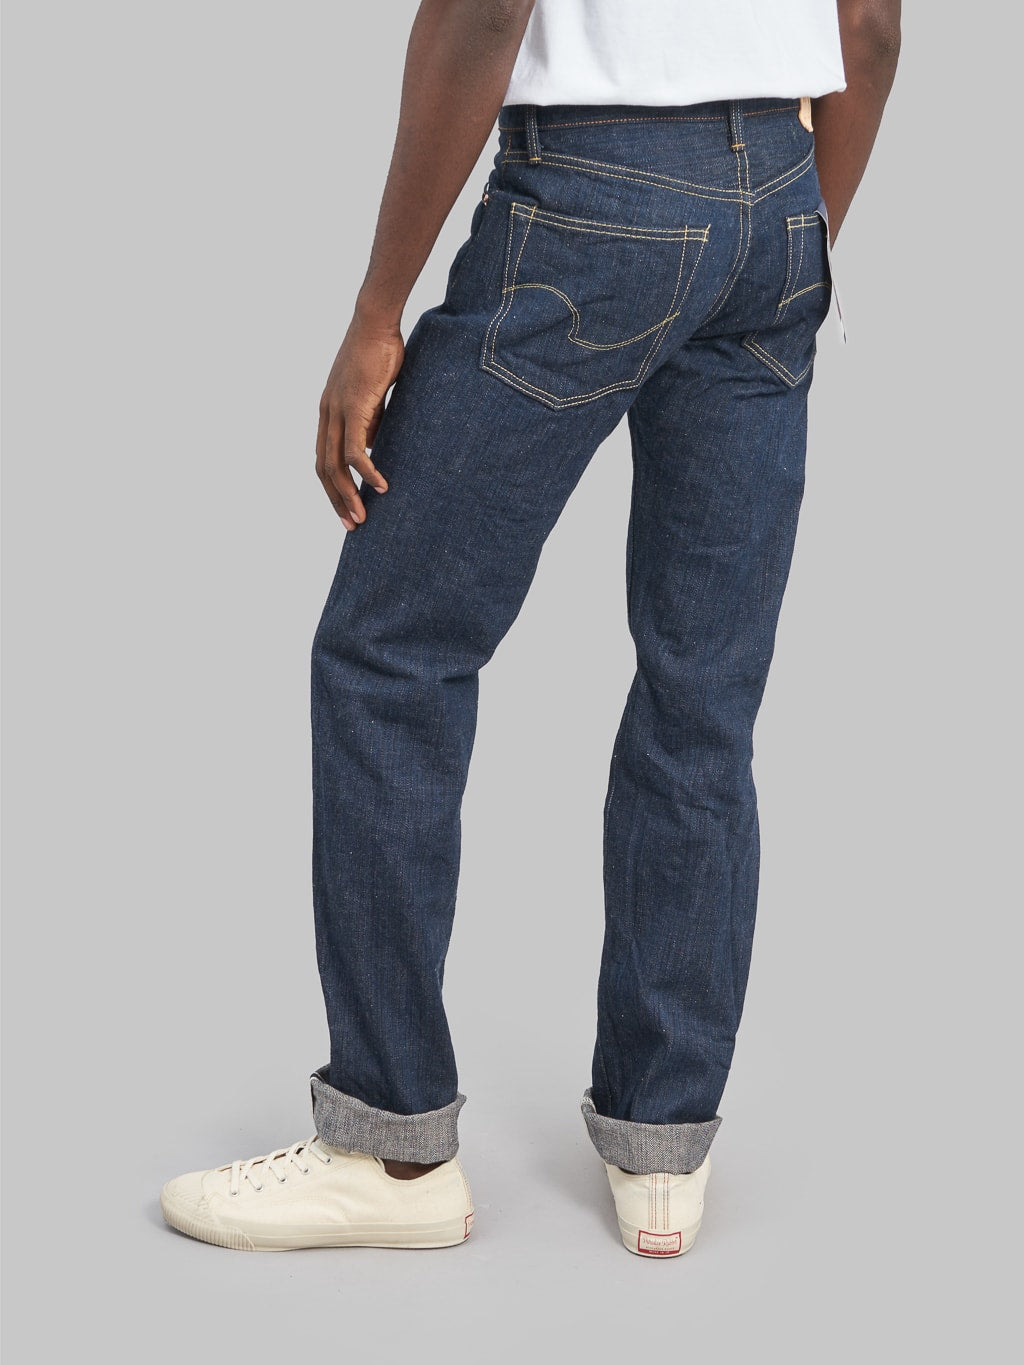 Oni denim kiwami indigo regular selvedge jeans back fit